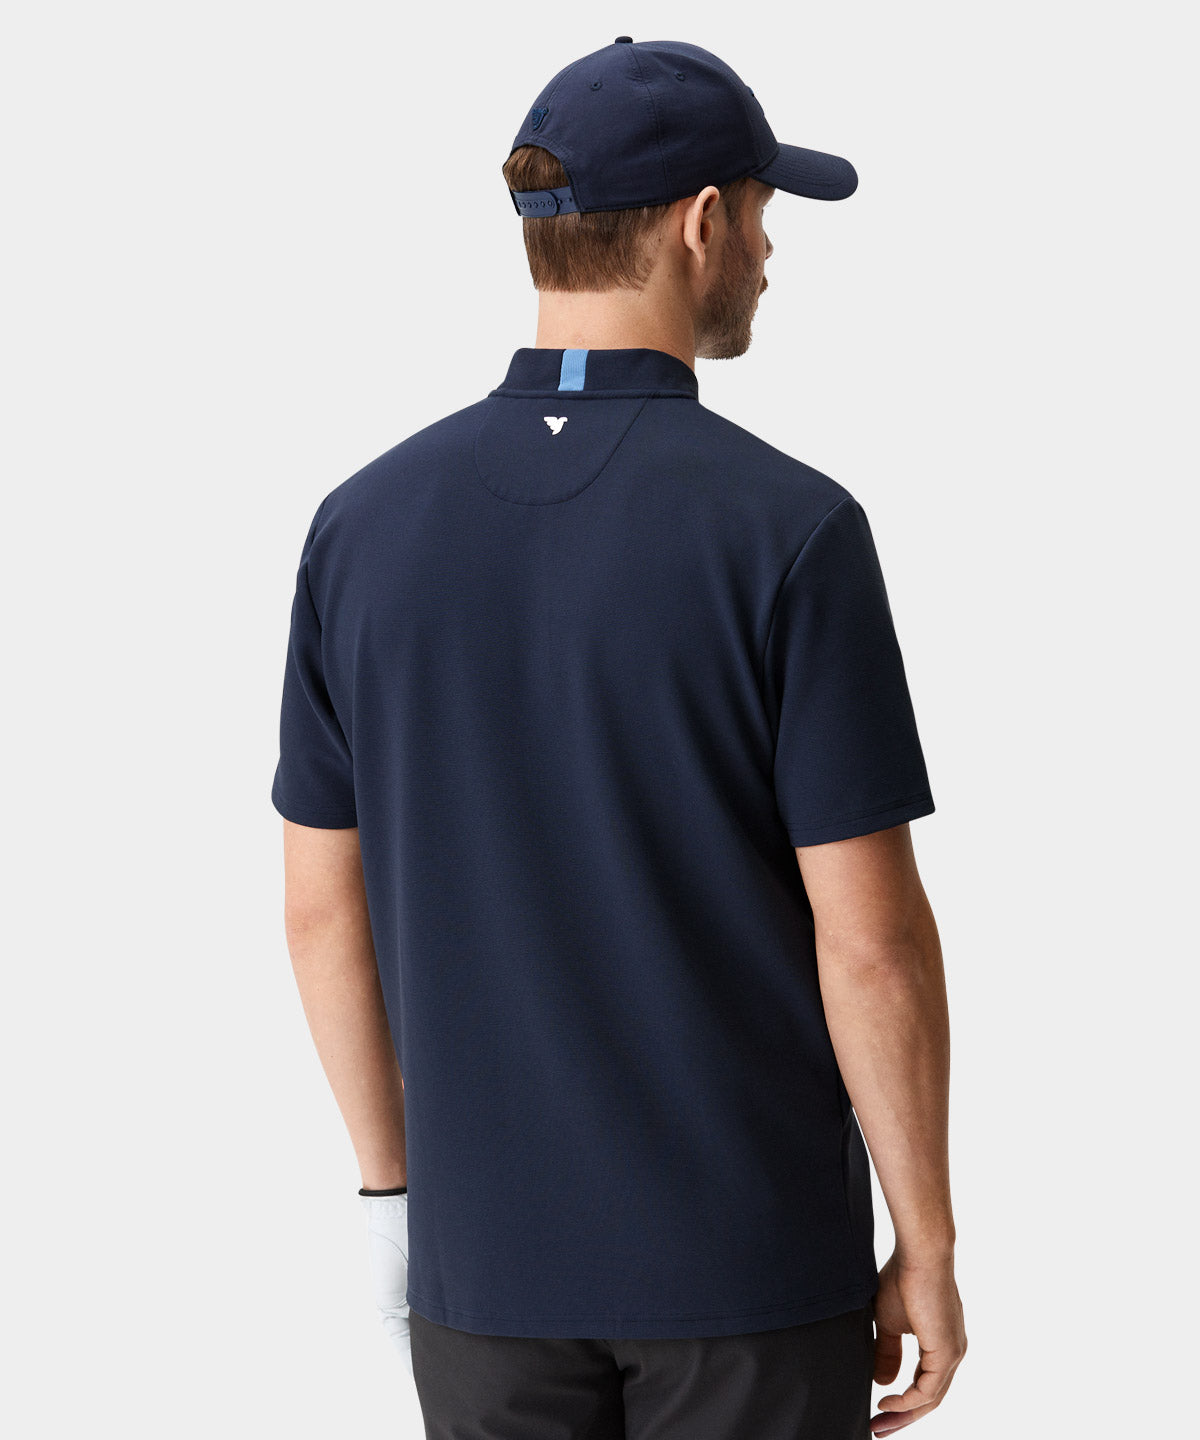 Heath Navy Bomber Shirt Macade Golf